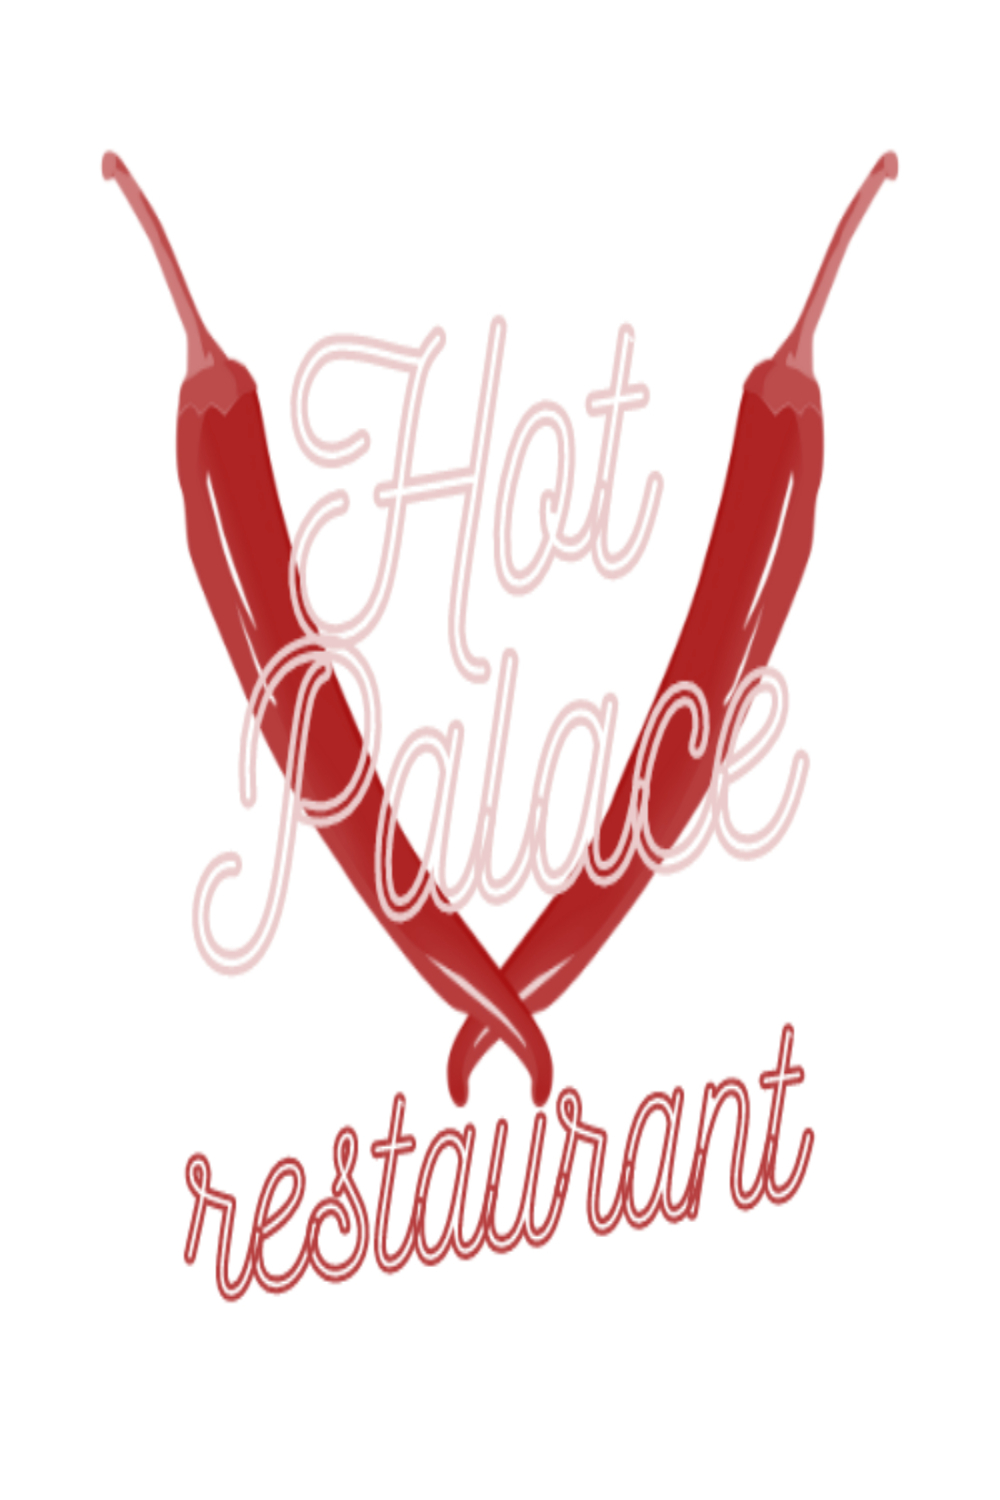 Restaurant Hot Palace Logo Design pinterest image.